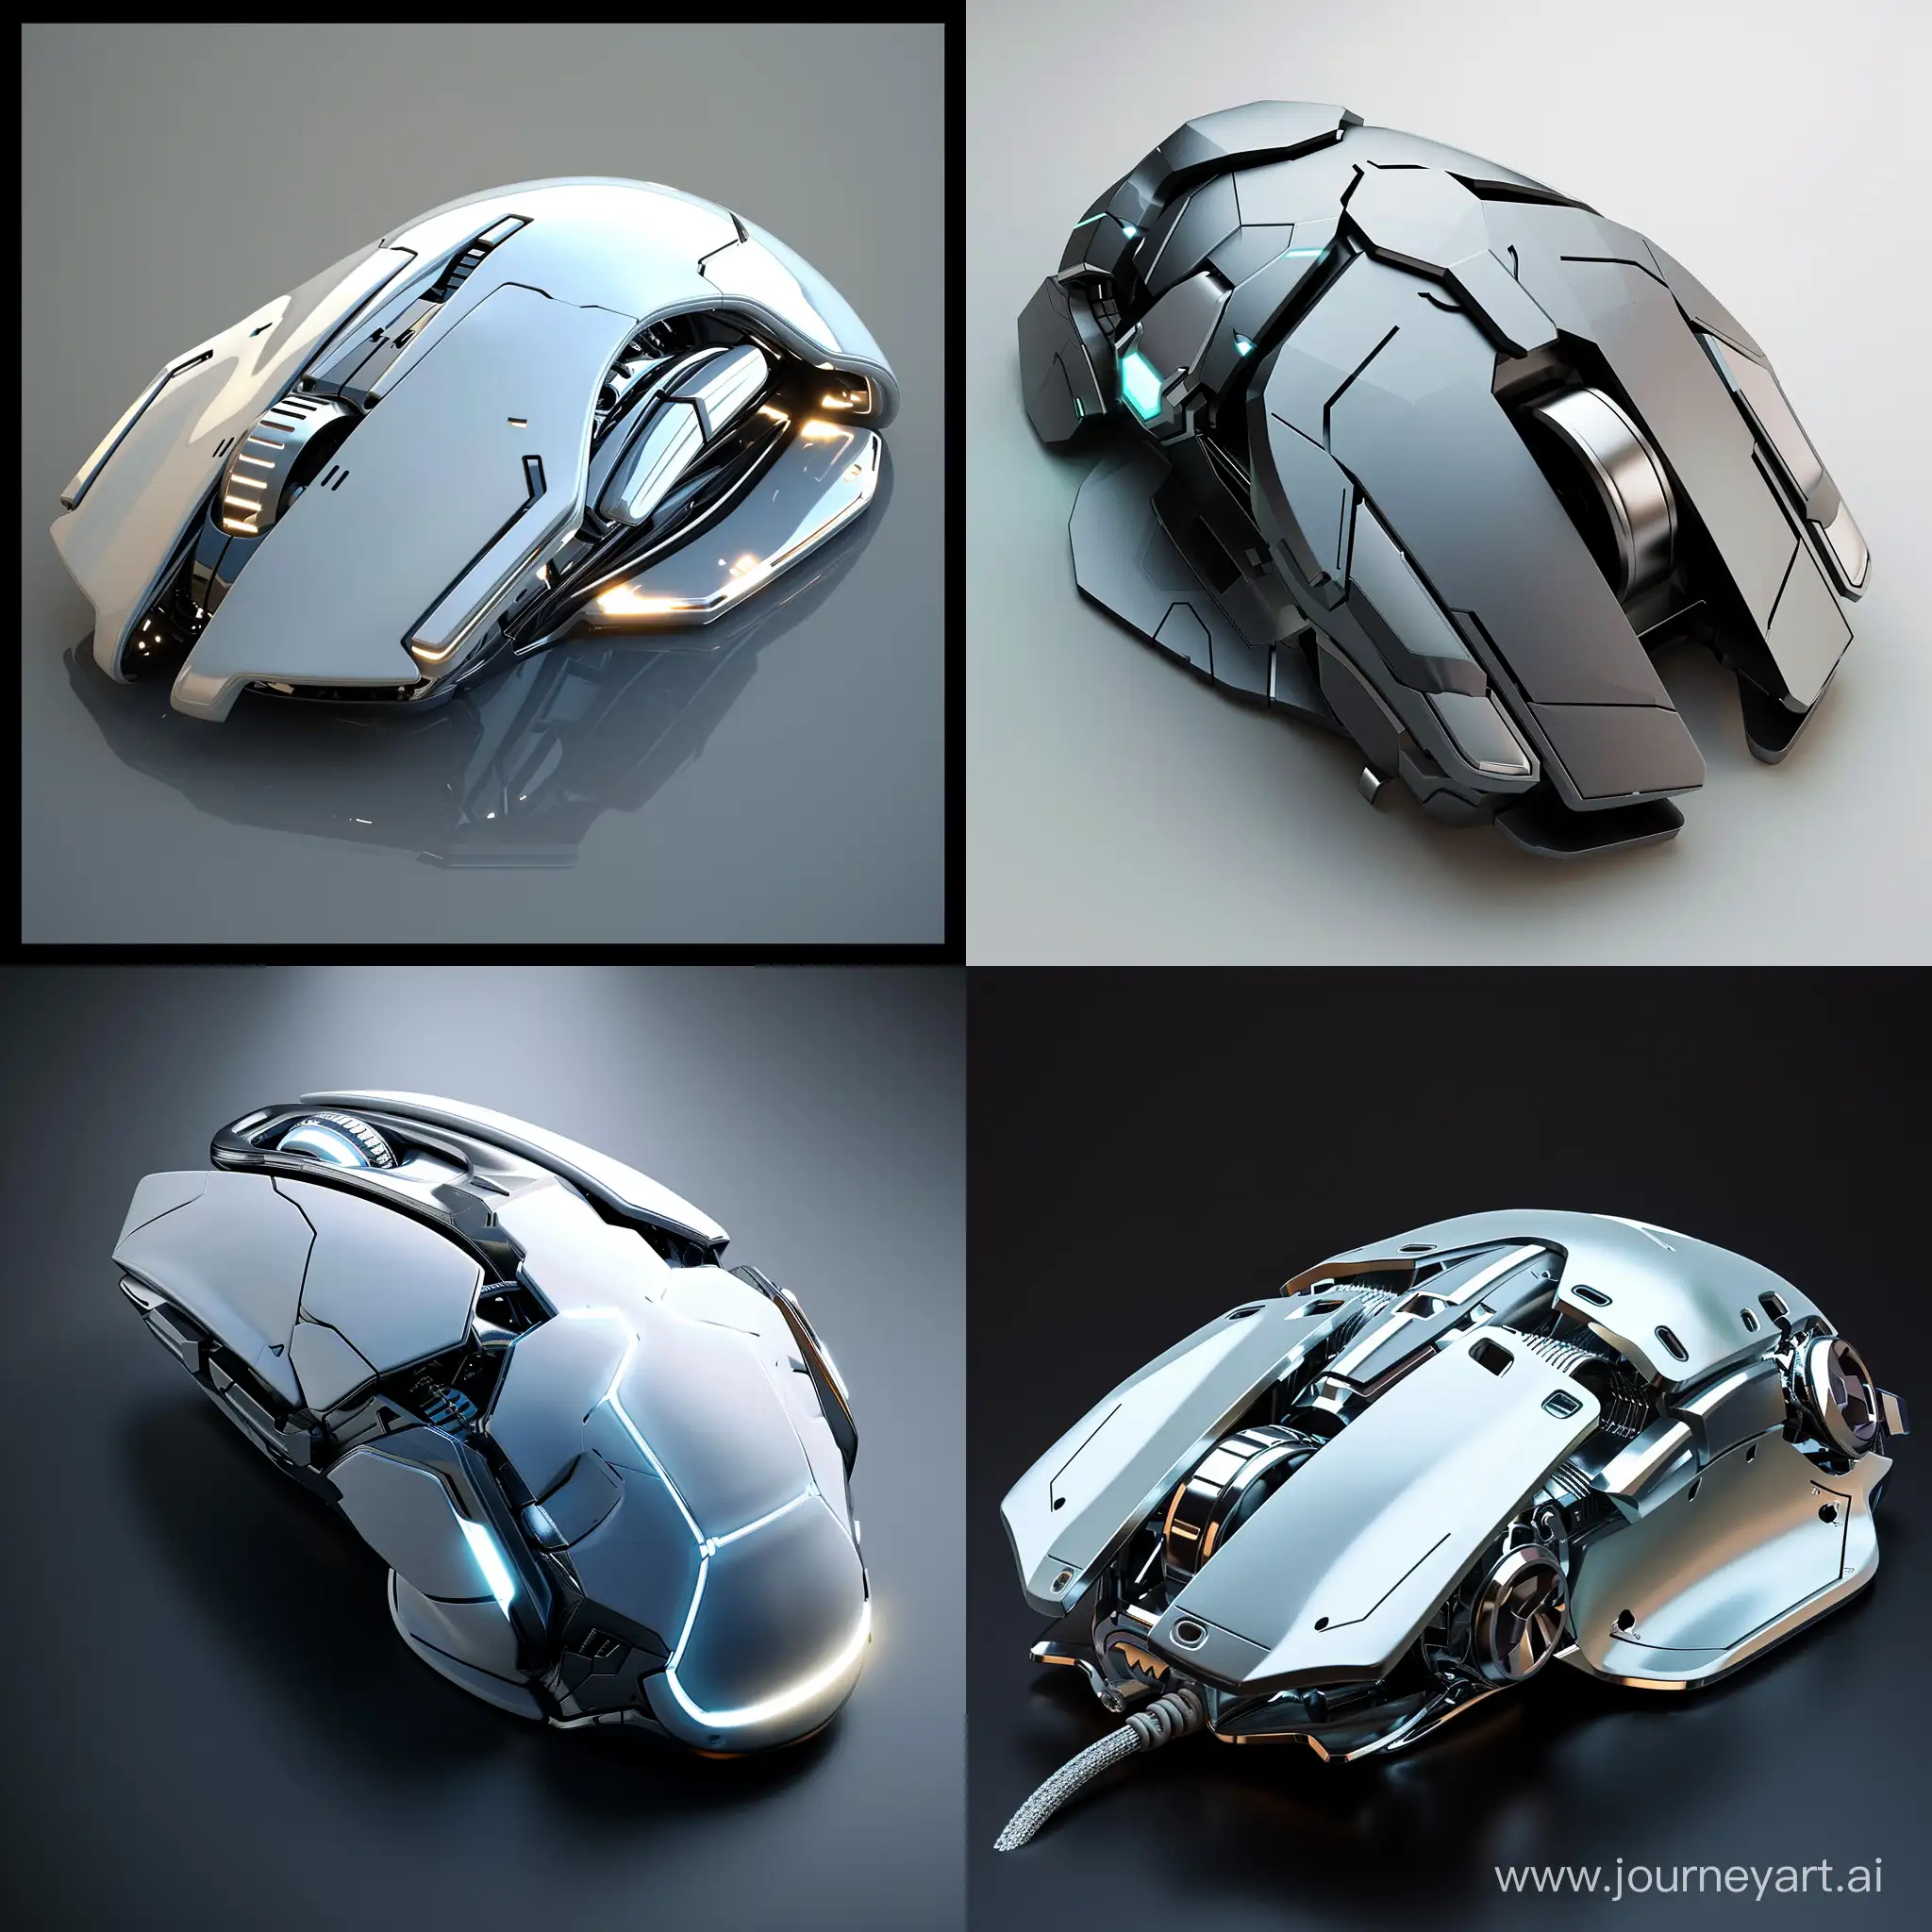 Futuristic-Armored-PC-Mouse-Art-SciFi-Design-on-ArtStation-and-DeviantArt